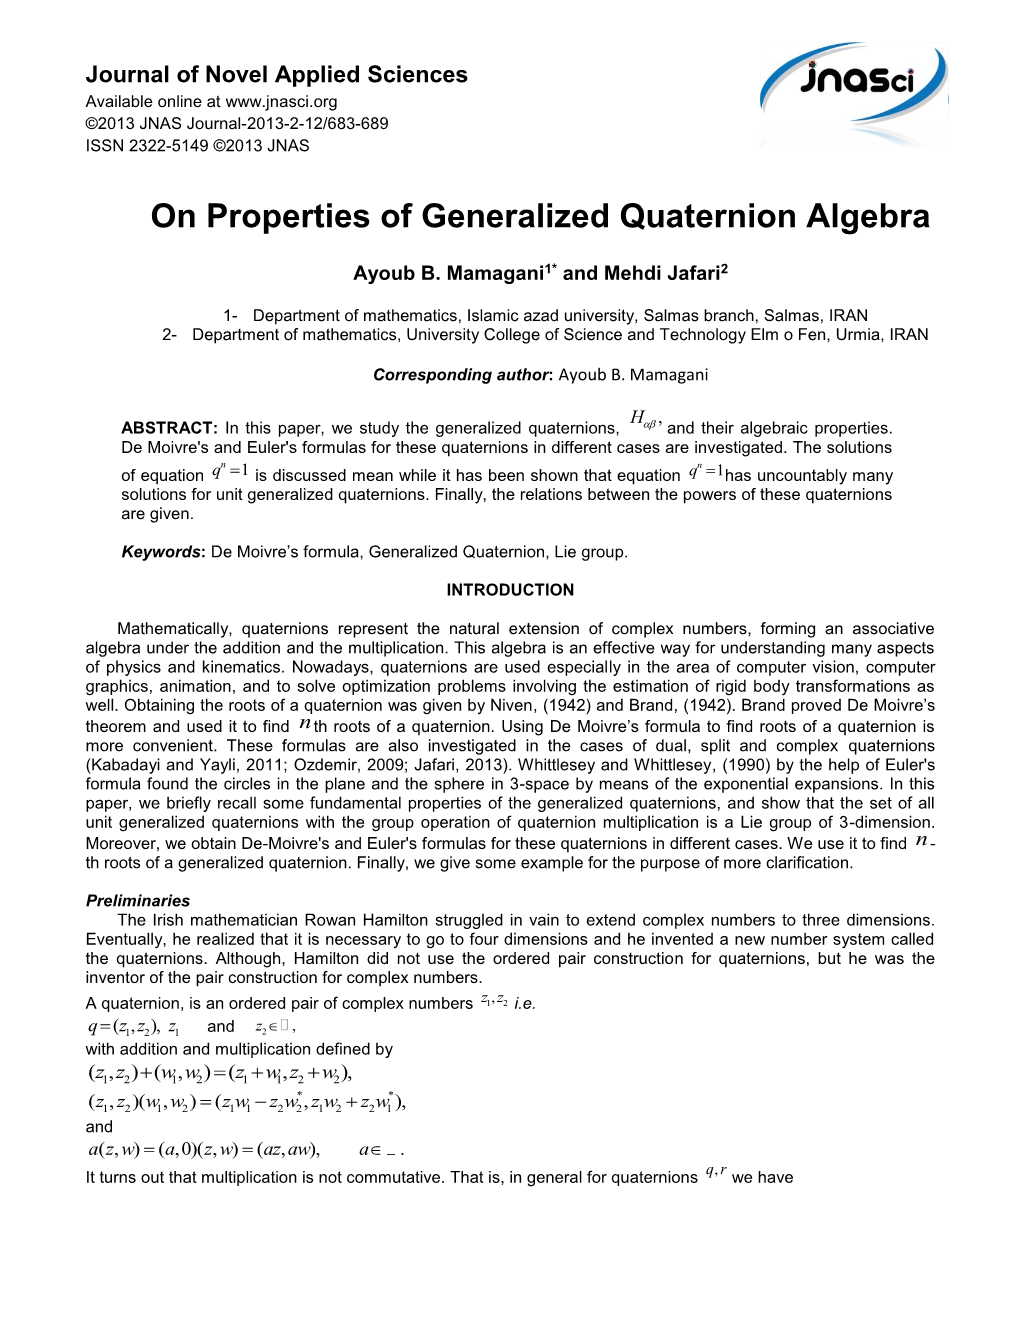 On Properties of Generalized Quaternion Algebra